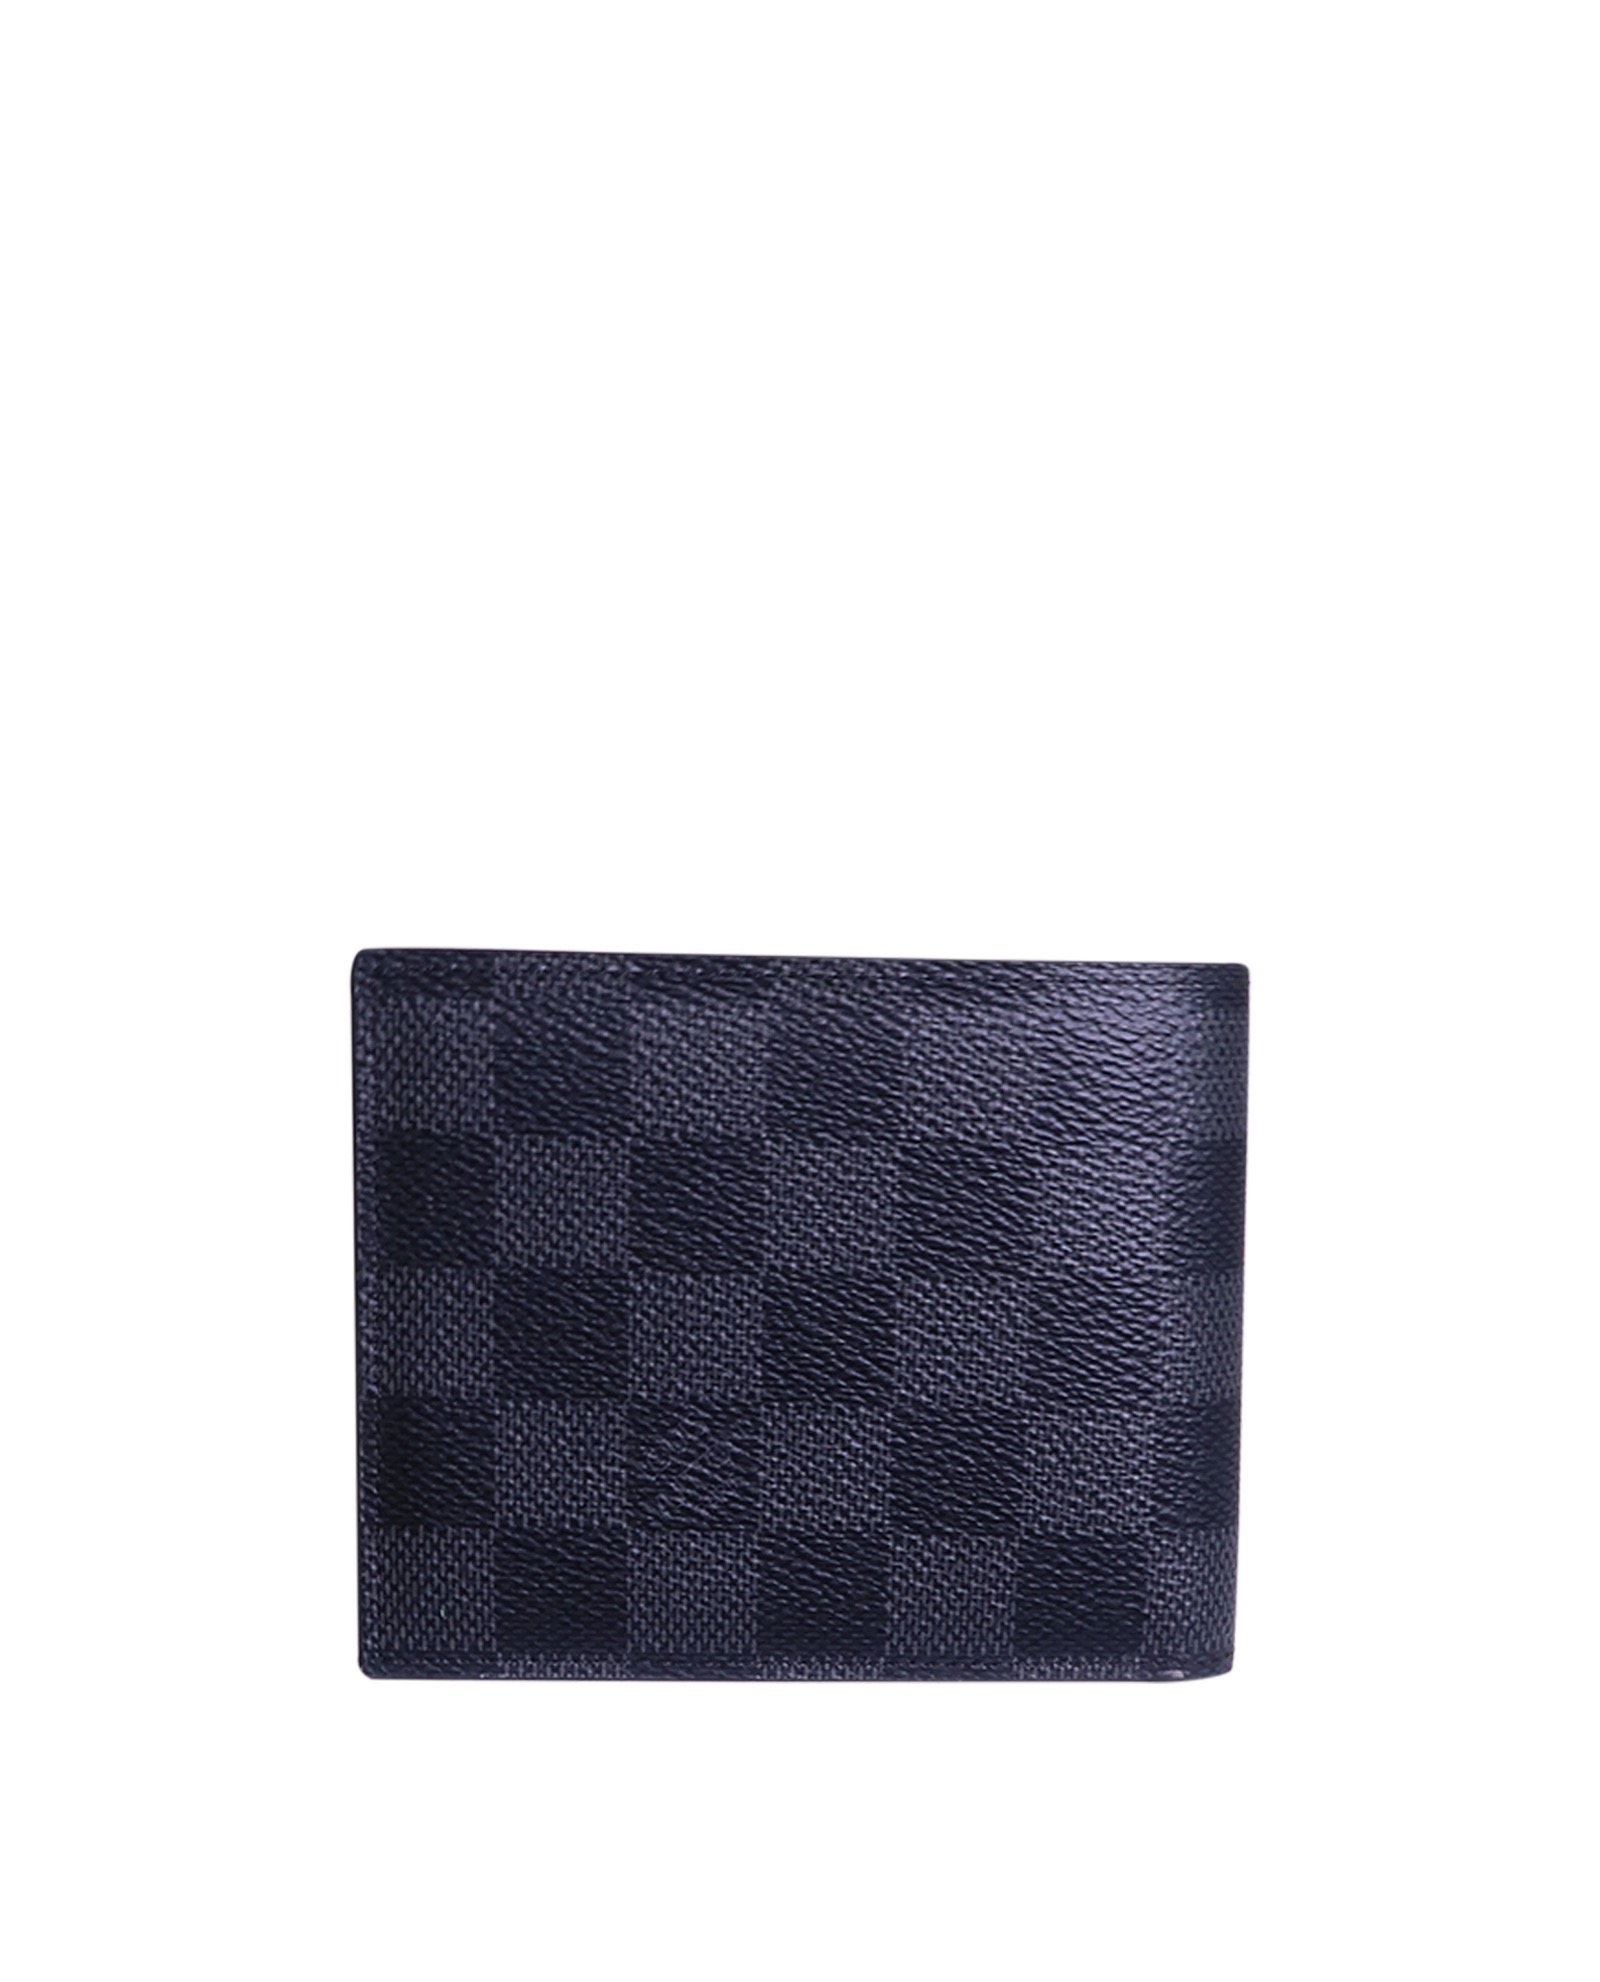 Louis Vuitton Amerigo Mens Wallet Excellent - Depop